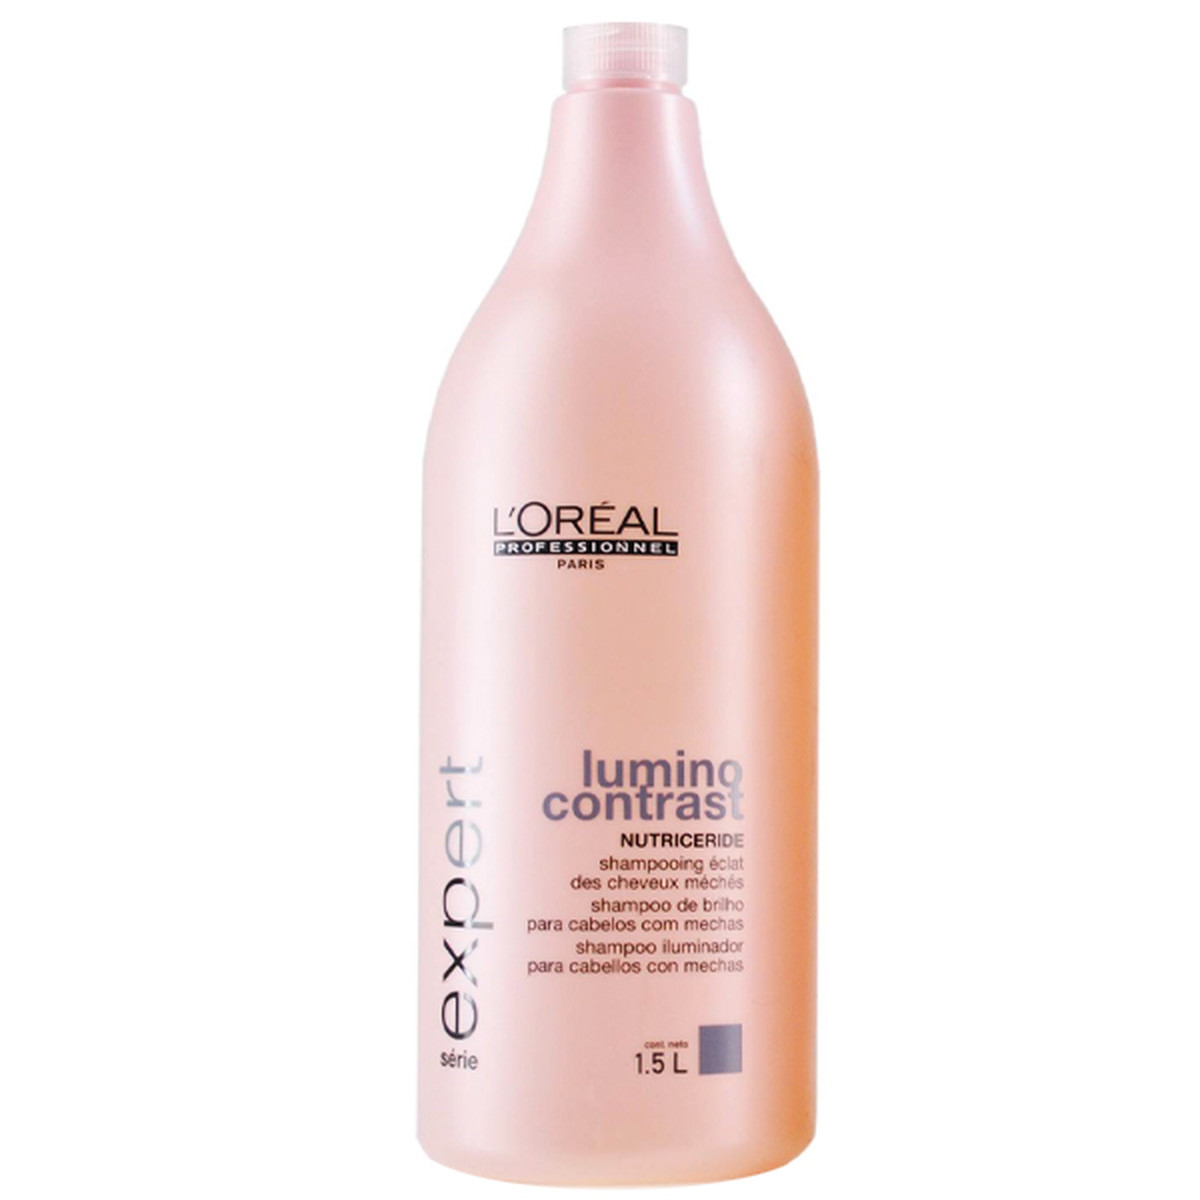 loreal lumino contrast szampon